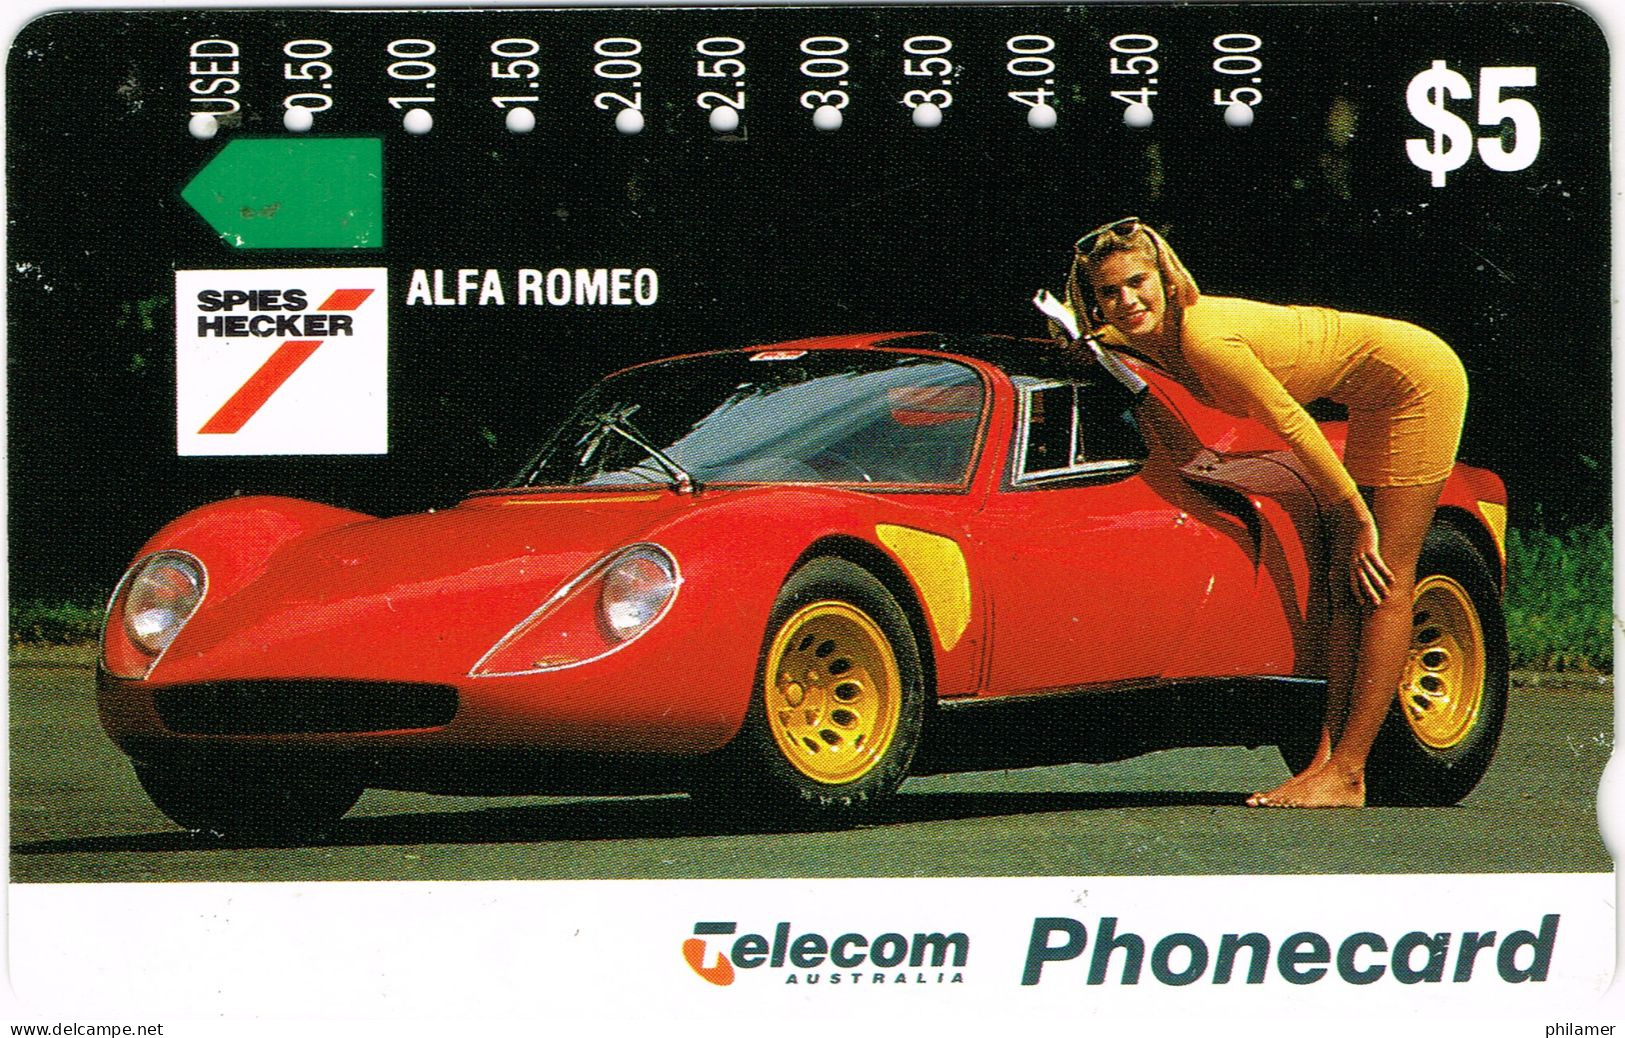 Australie Australia Telecarte Phonecard Carte A Trous Privee Spies Hecker Alfa Romeo Voiture Car 5$ UT  BE - Australie